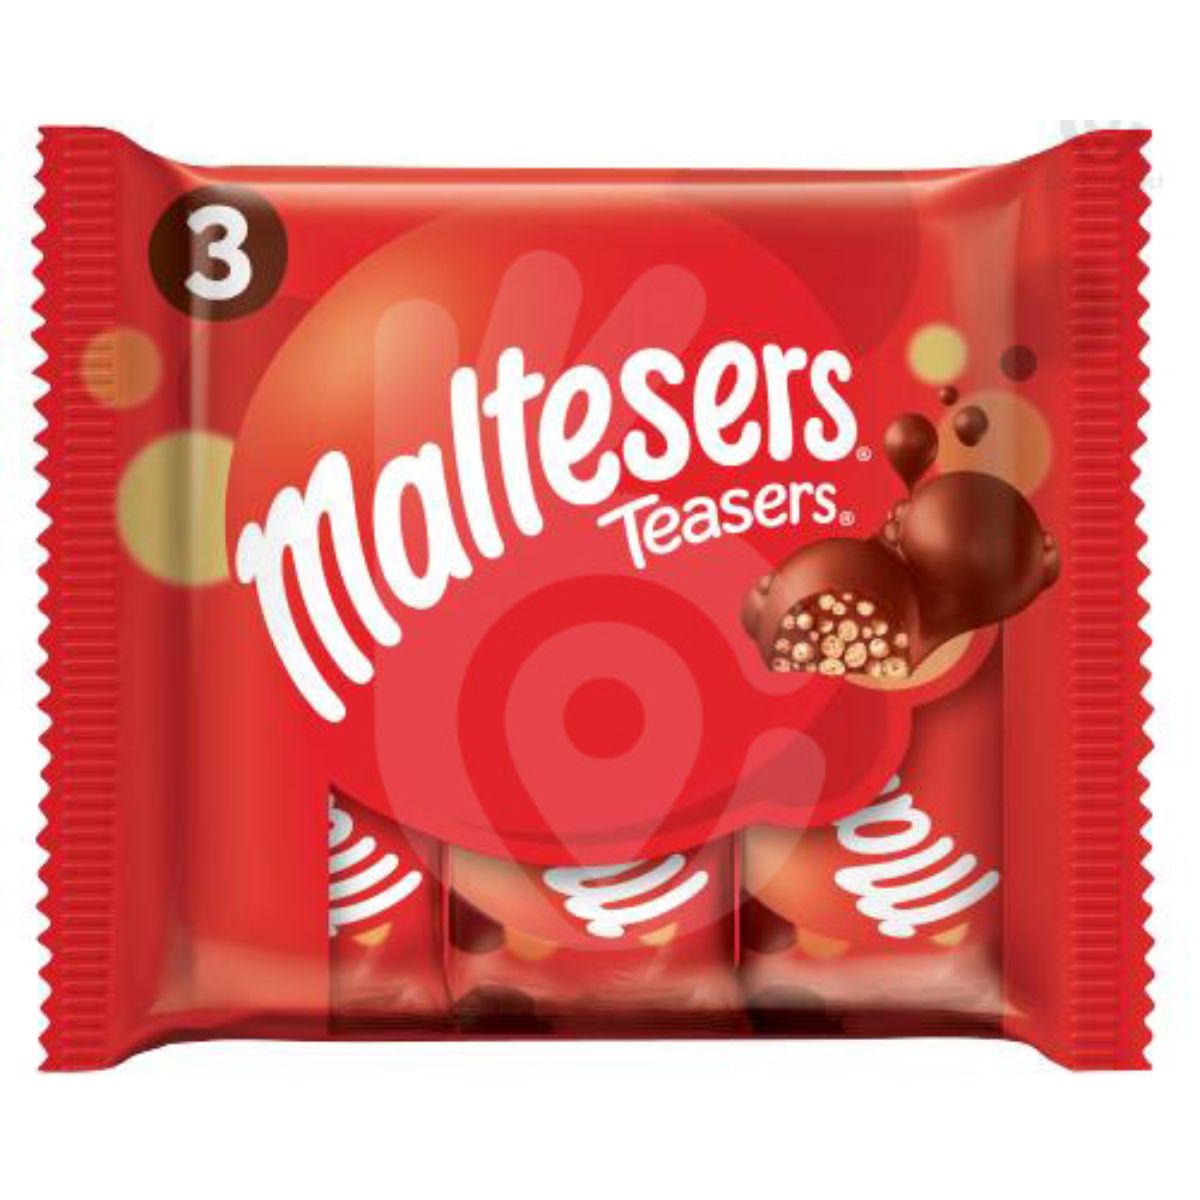 Maltesers - Teasers Chocolate Multipack Bars - 3 x 35g, 3 pcs.